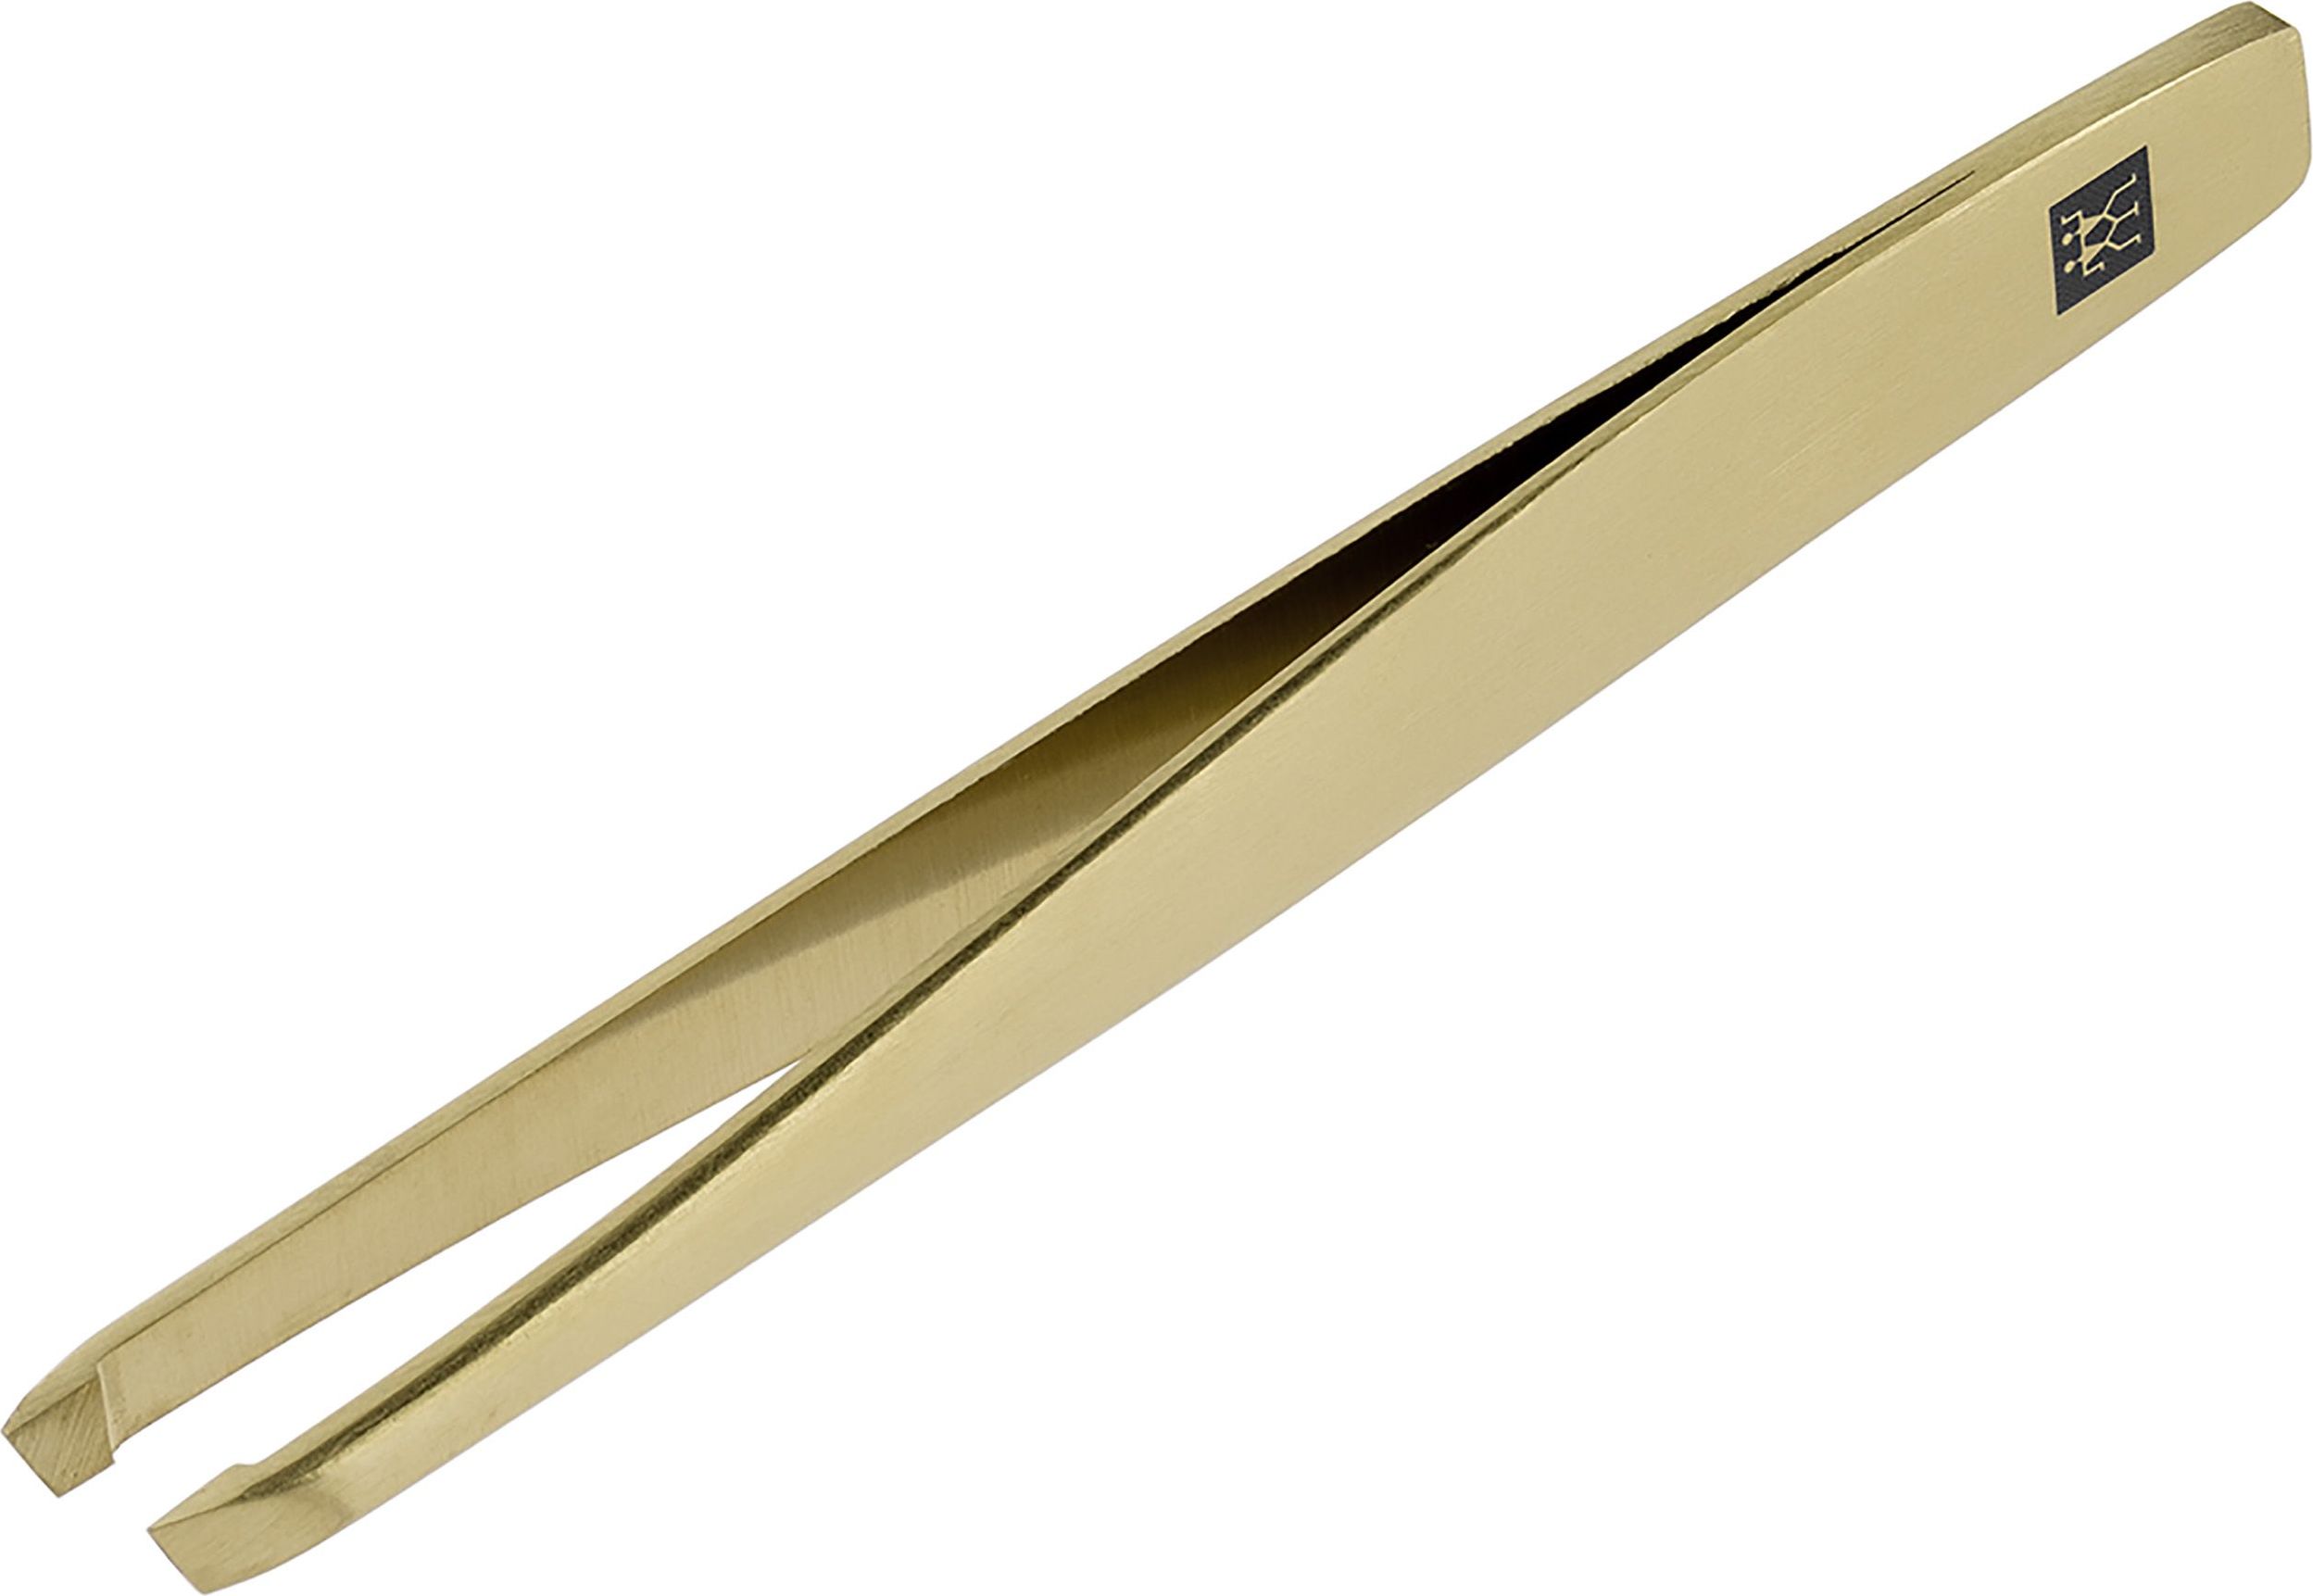 Twinox Gold Edition Angled tweezers - Zwilling 78280-101-0